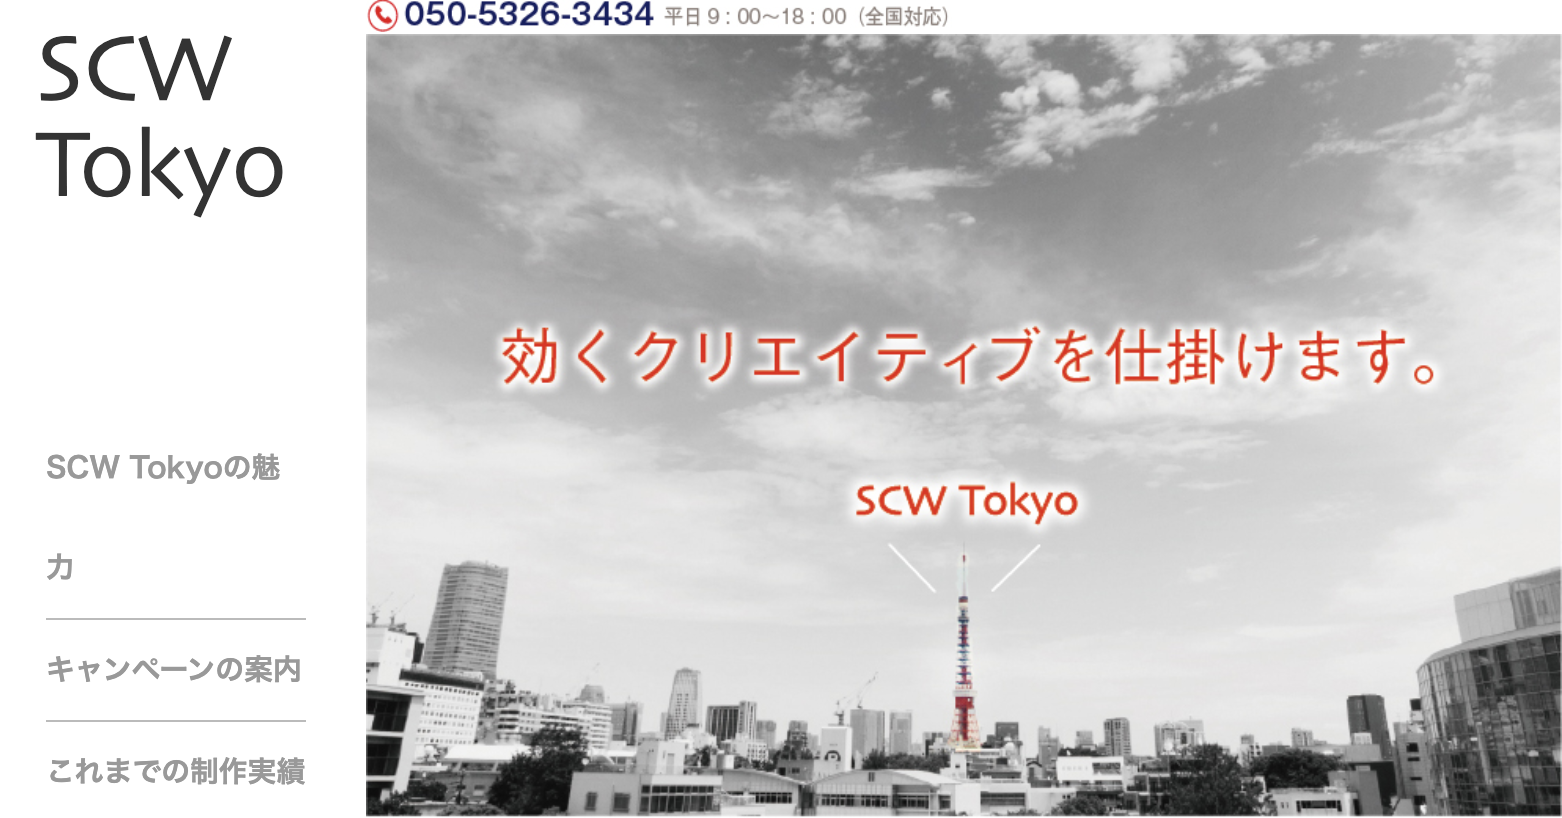 SCW Tokyo合同会社